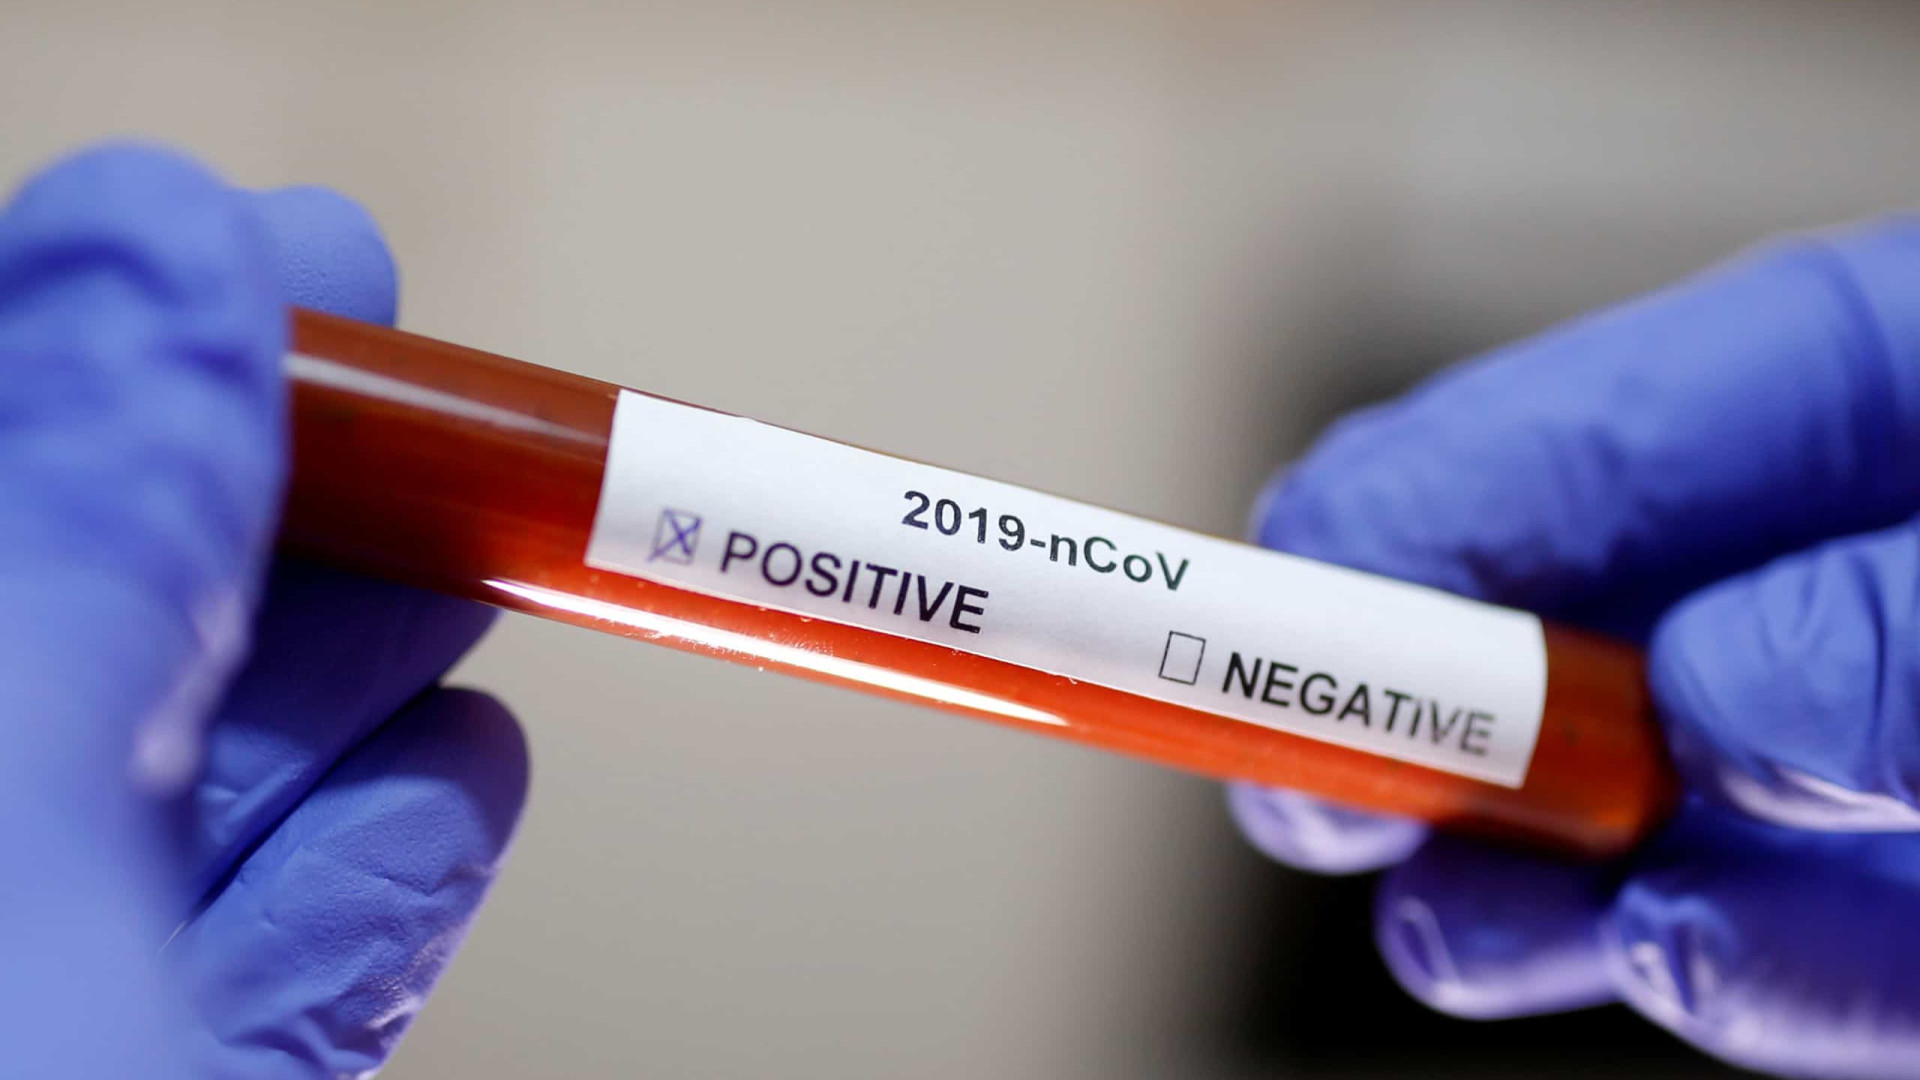 NY confirma mais 37 casos de coronavírus; total chega a 142